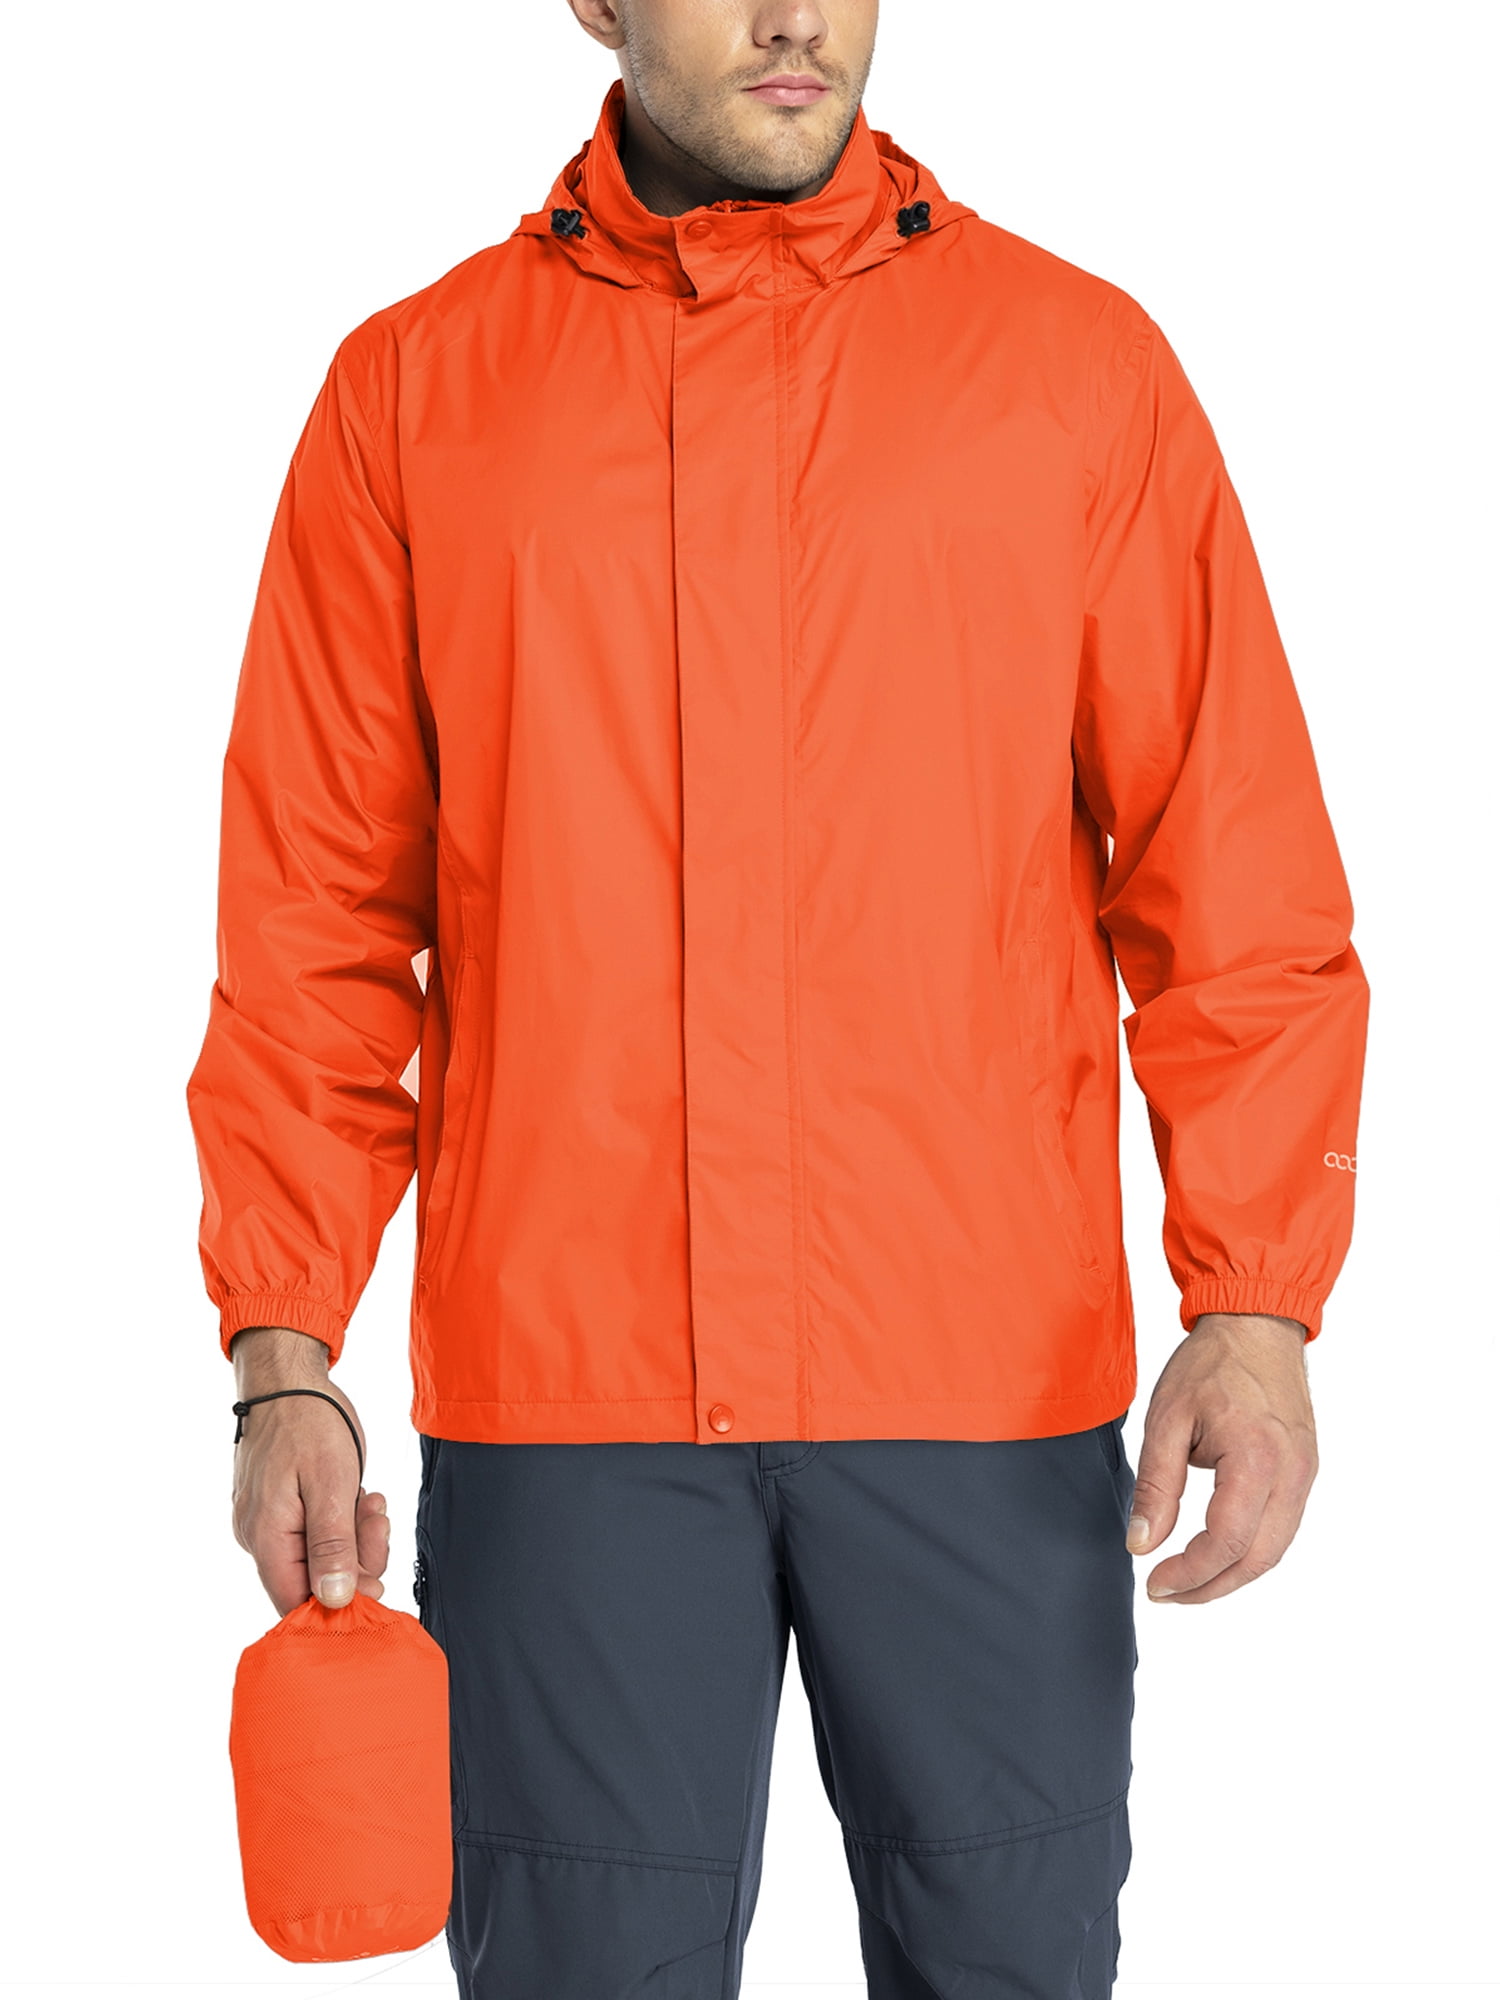 33,000ft Men's Packable Rain Jacket Hooded Lightweight Waterproof Rain Shell Jacket Raincoat for Hiking Golf Cycling, Size: XL, Orange